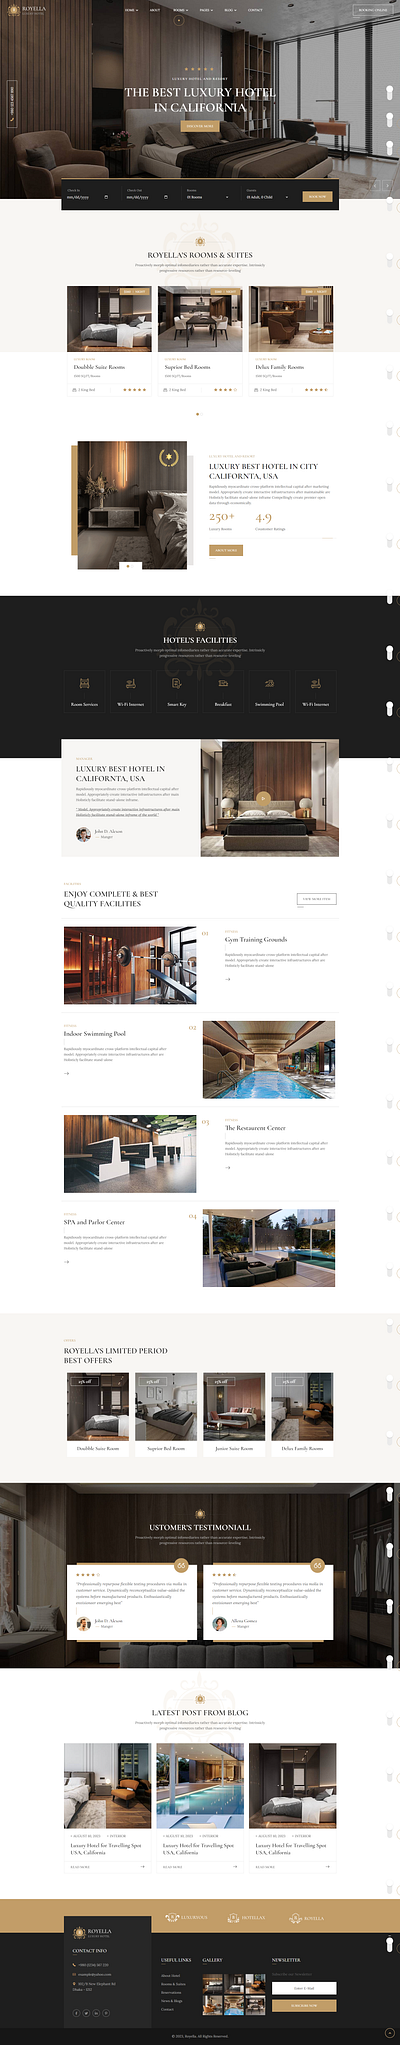 Royella – Resort and Hotel Boking HTML5 Template travel